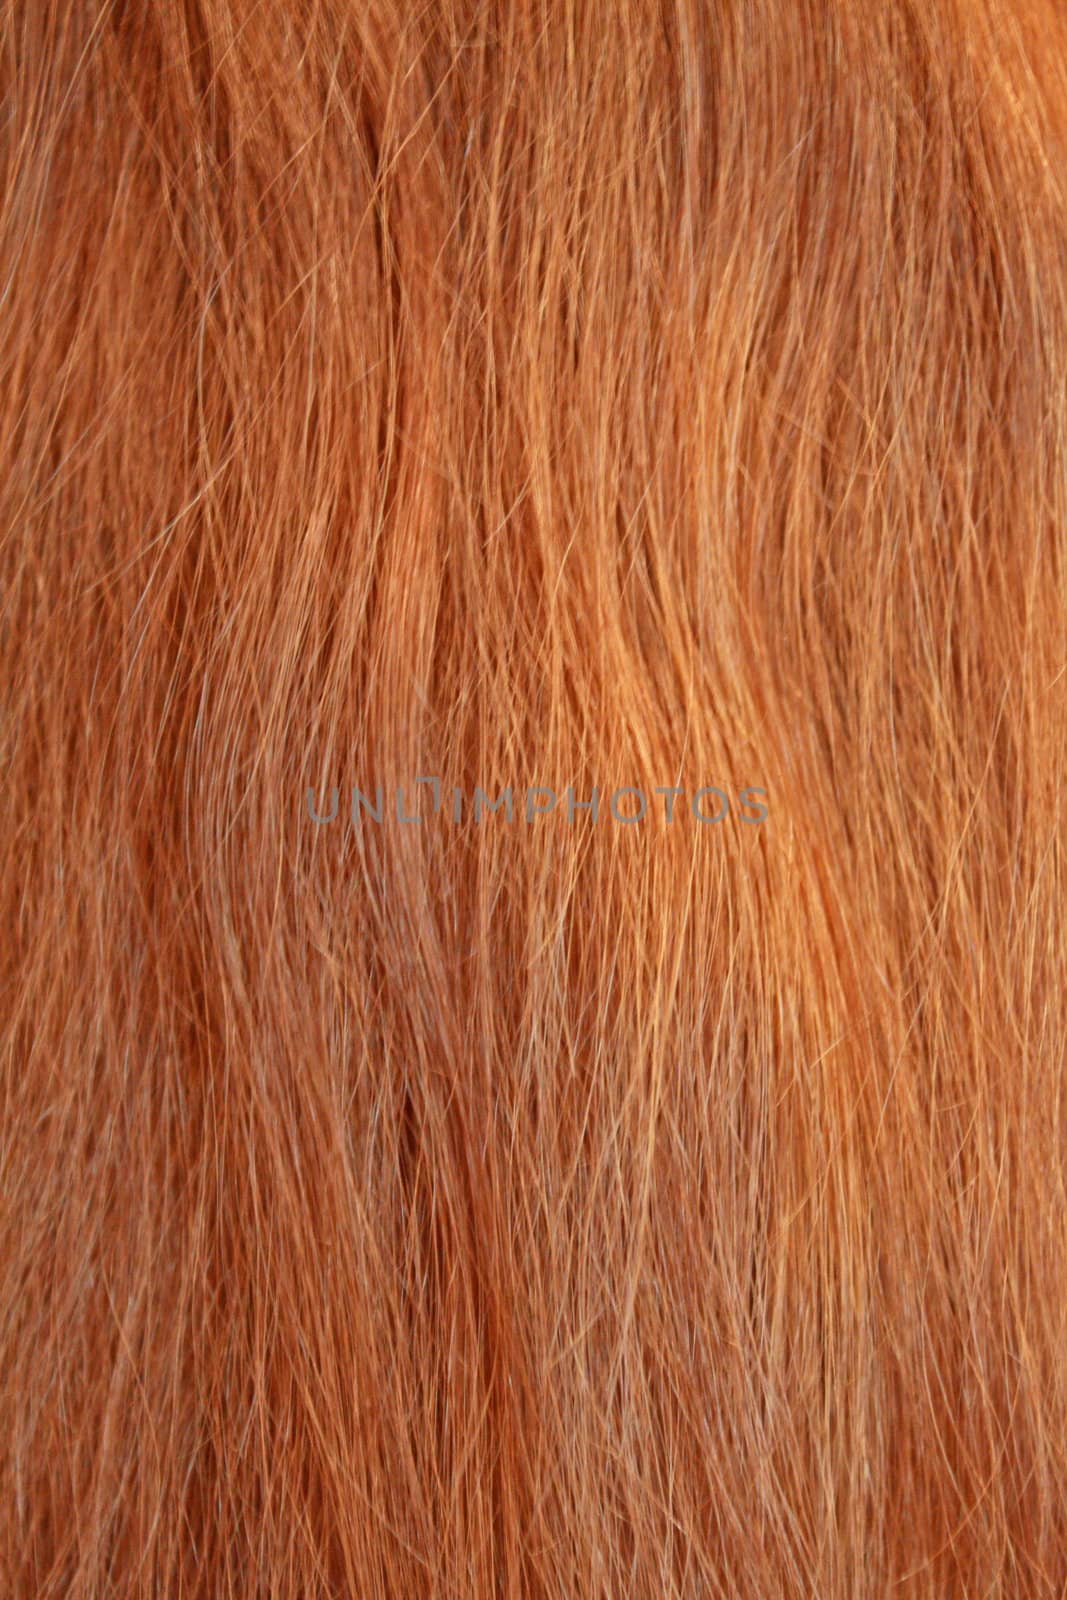 Red hair by Lessadar